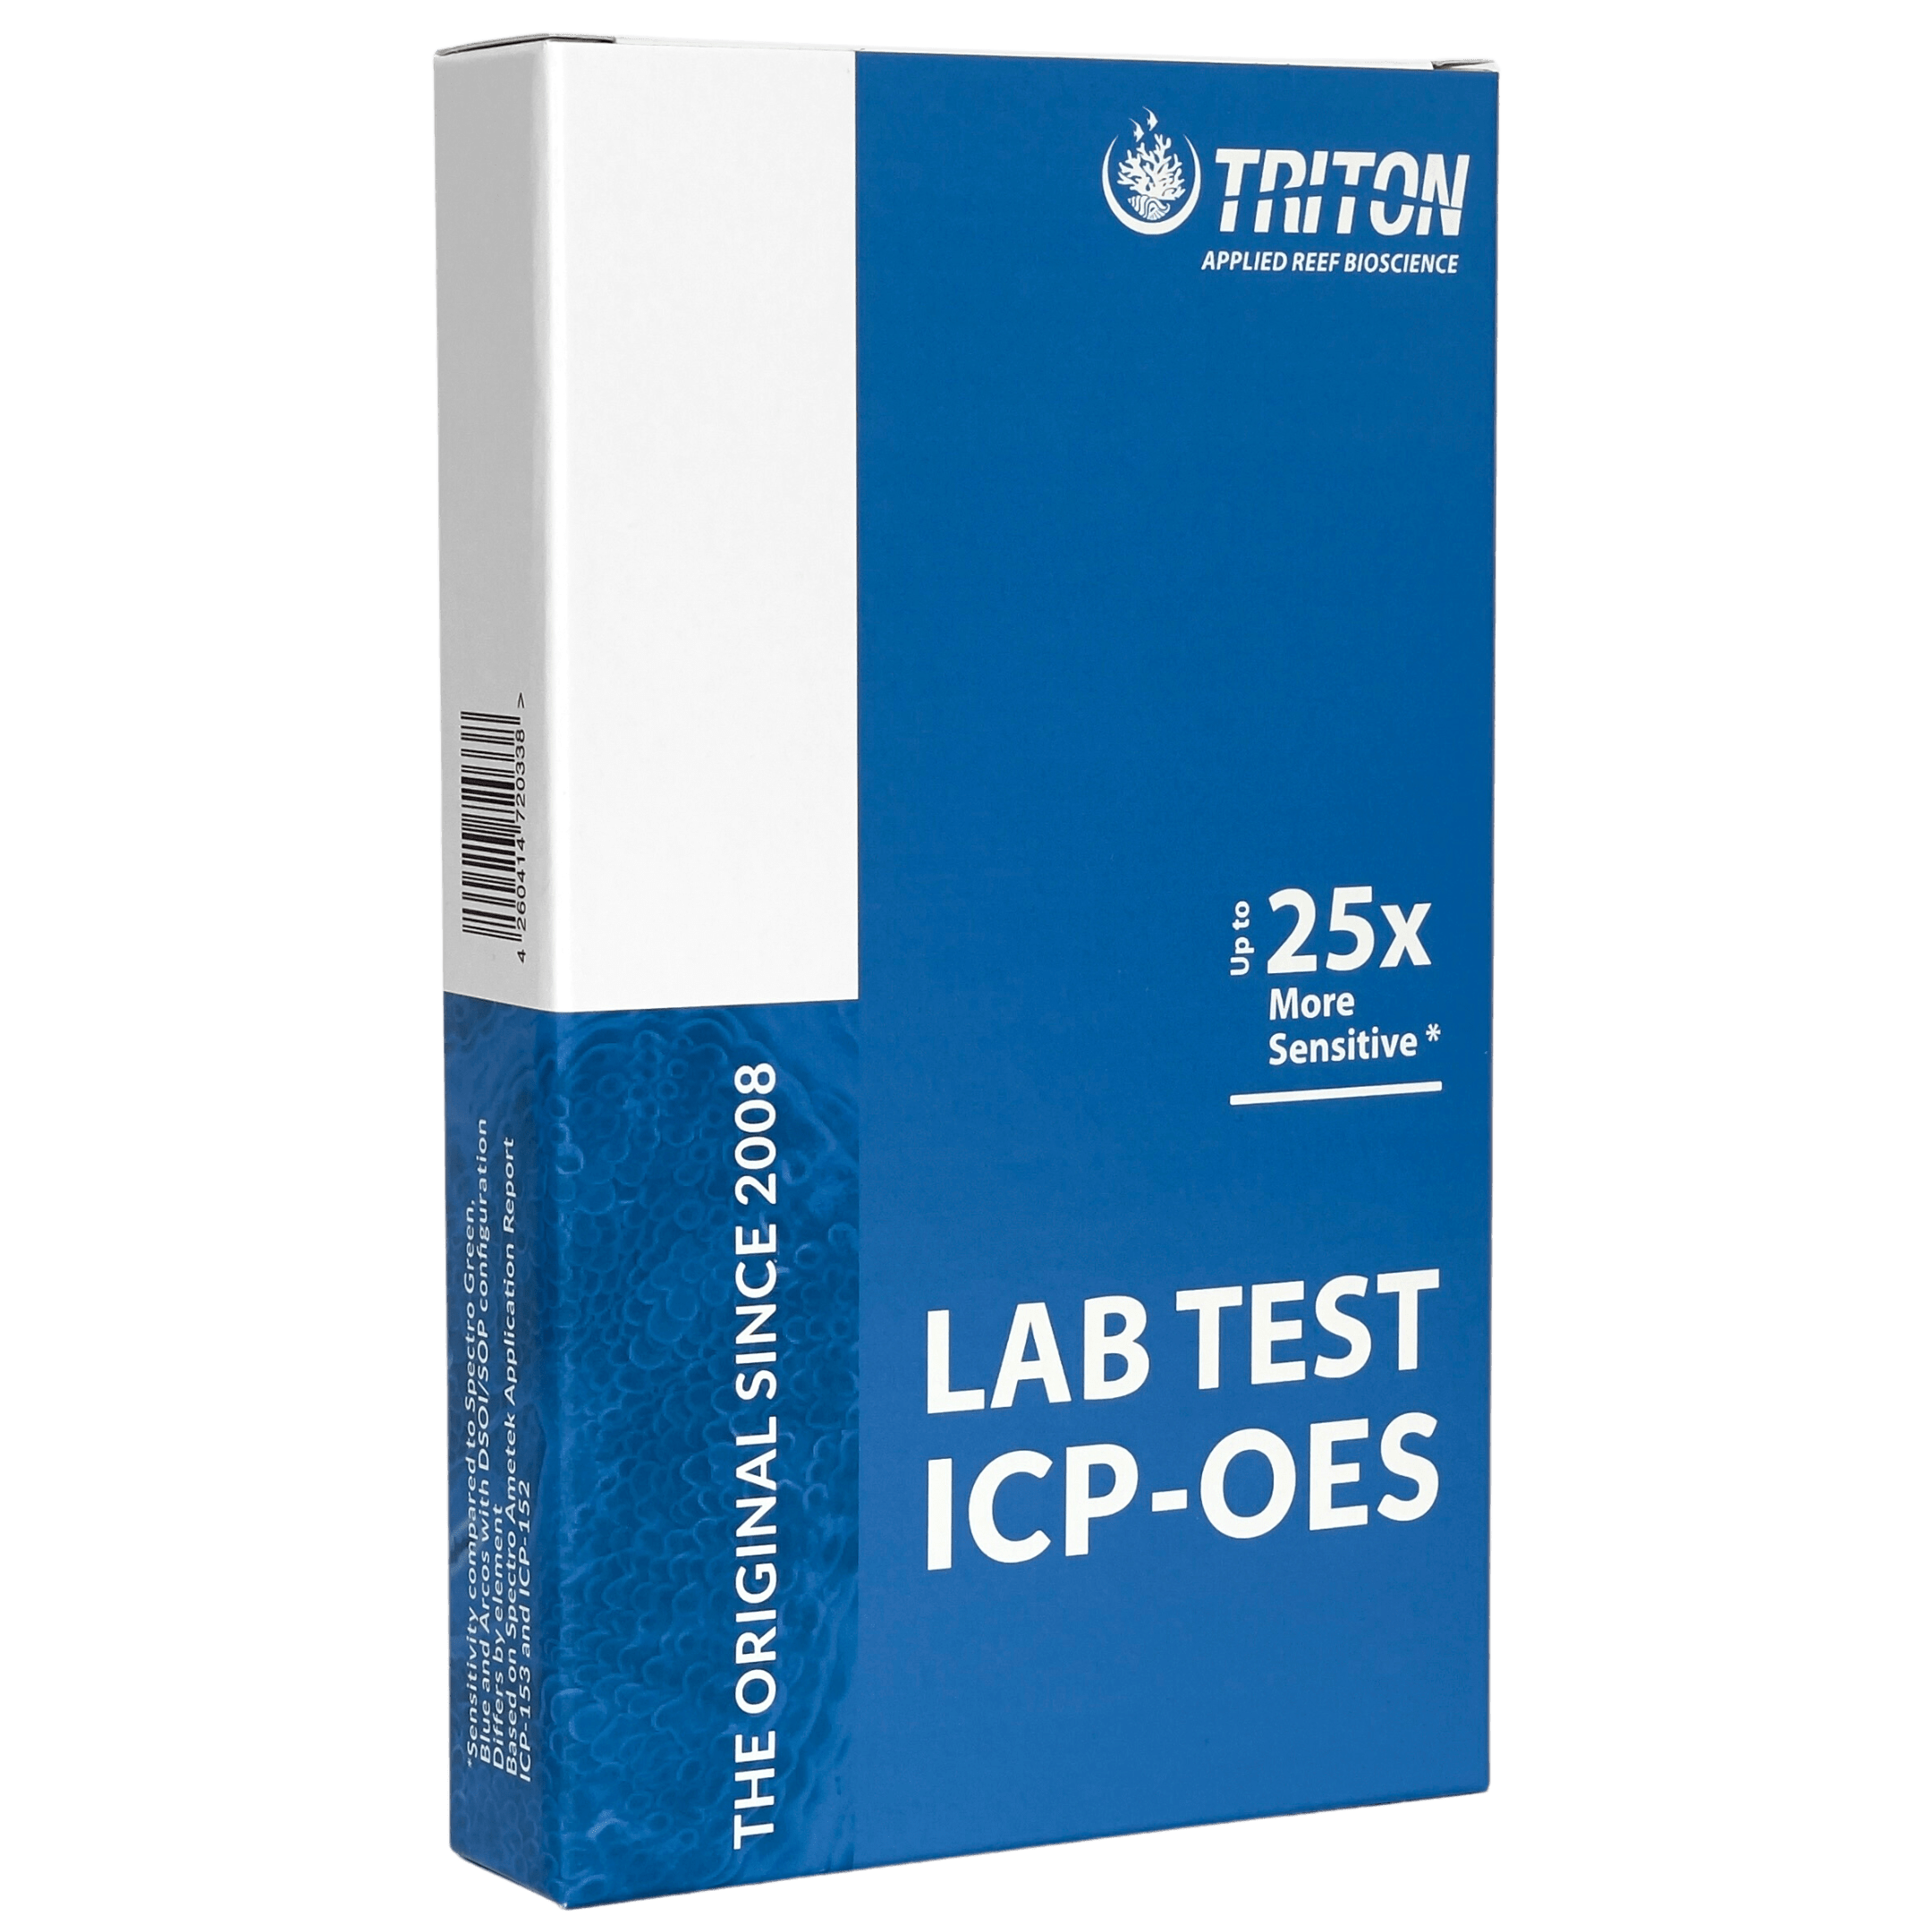 Triton ICP test pillow case front view